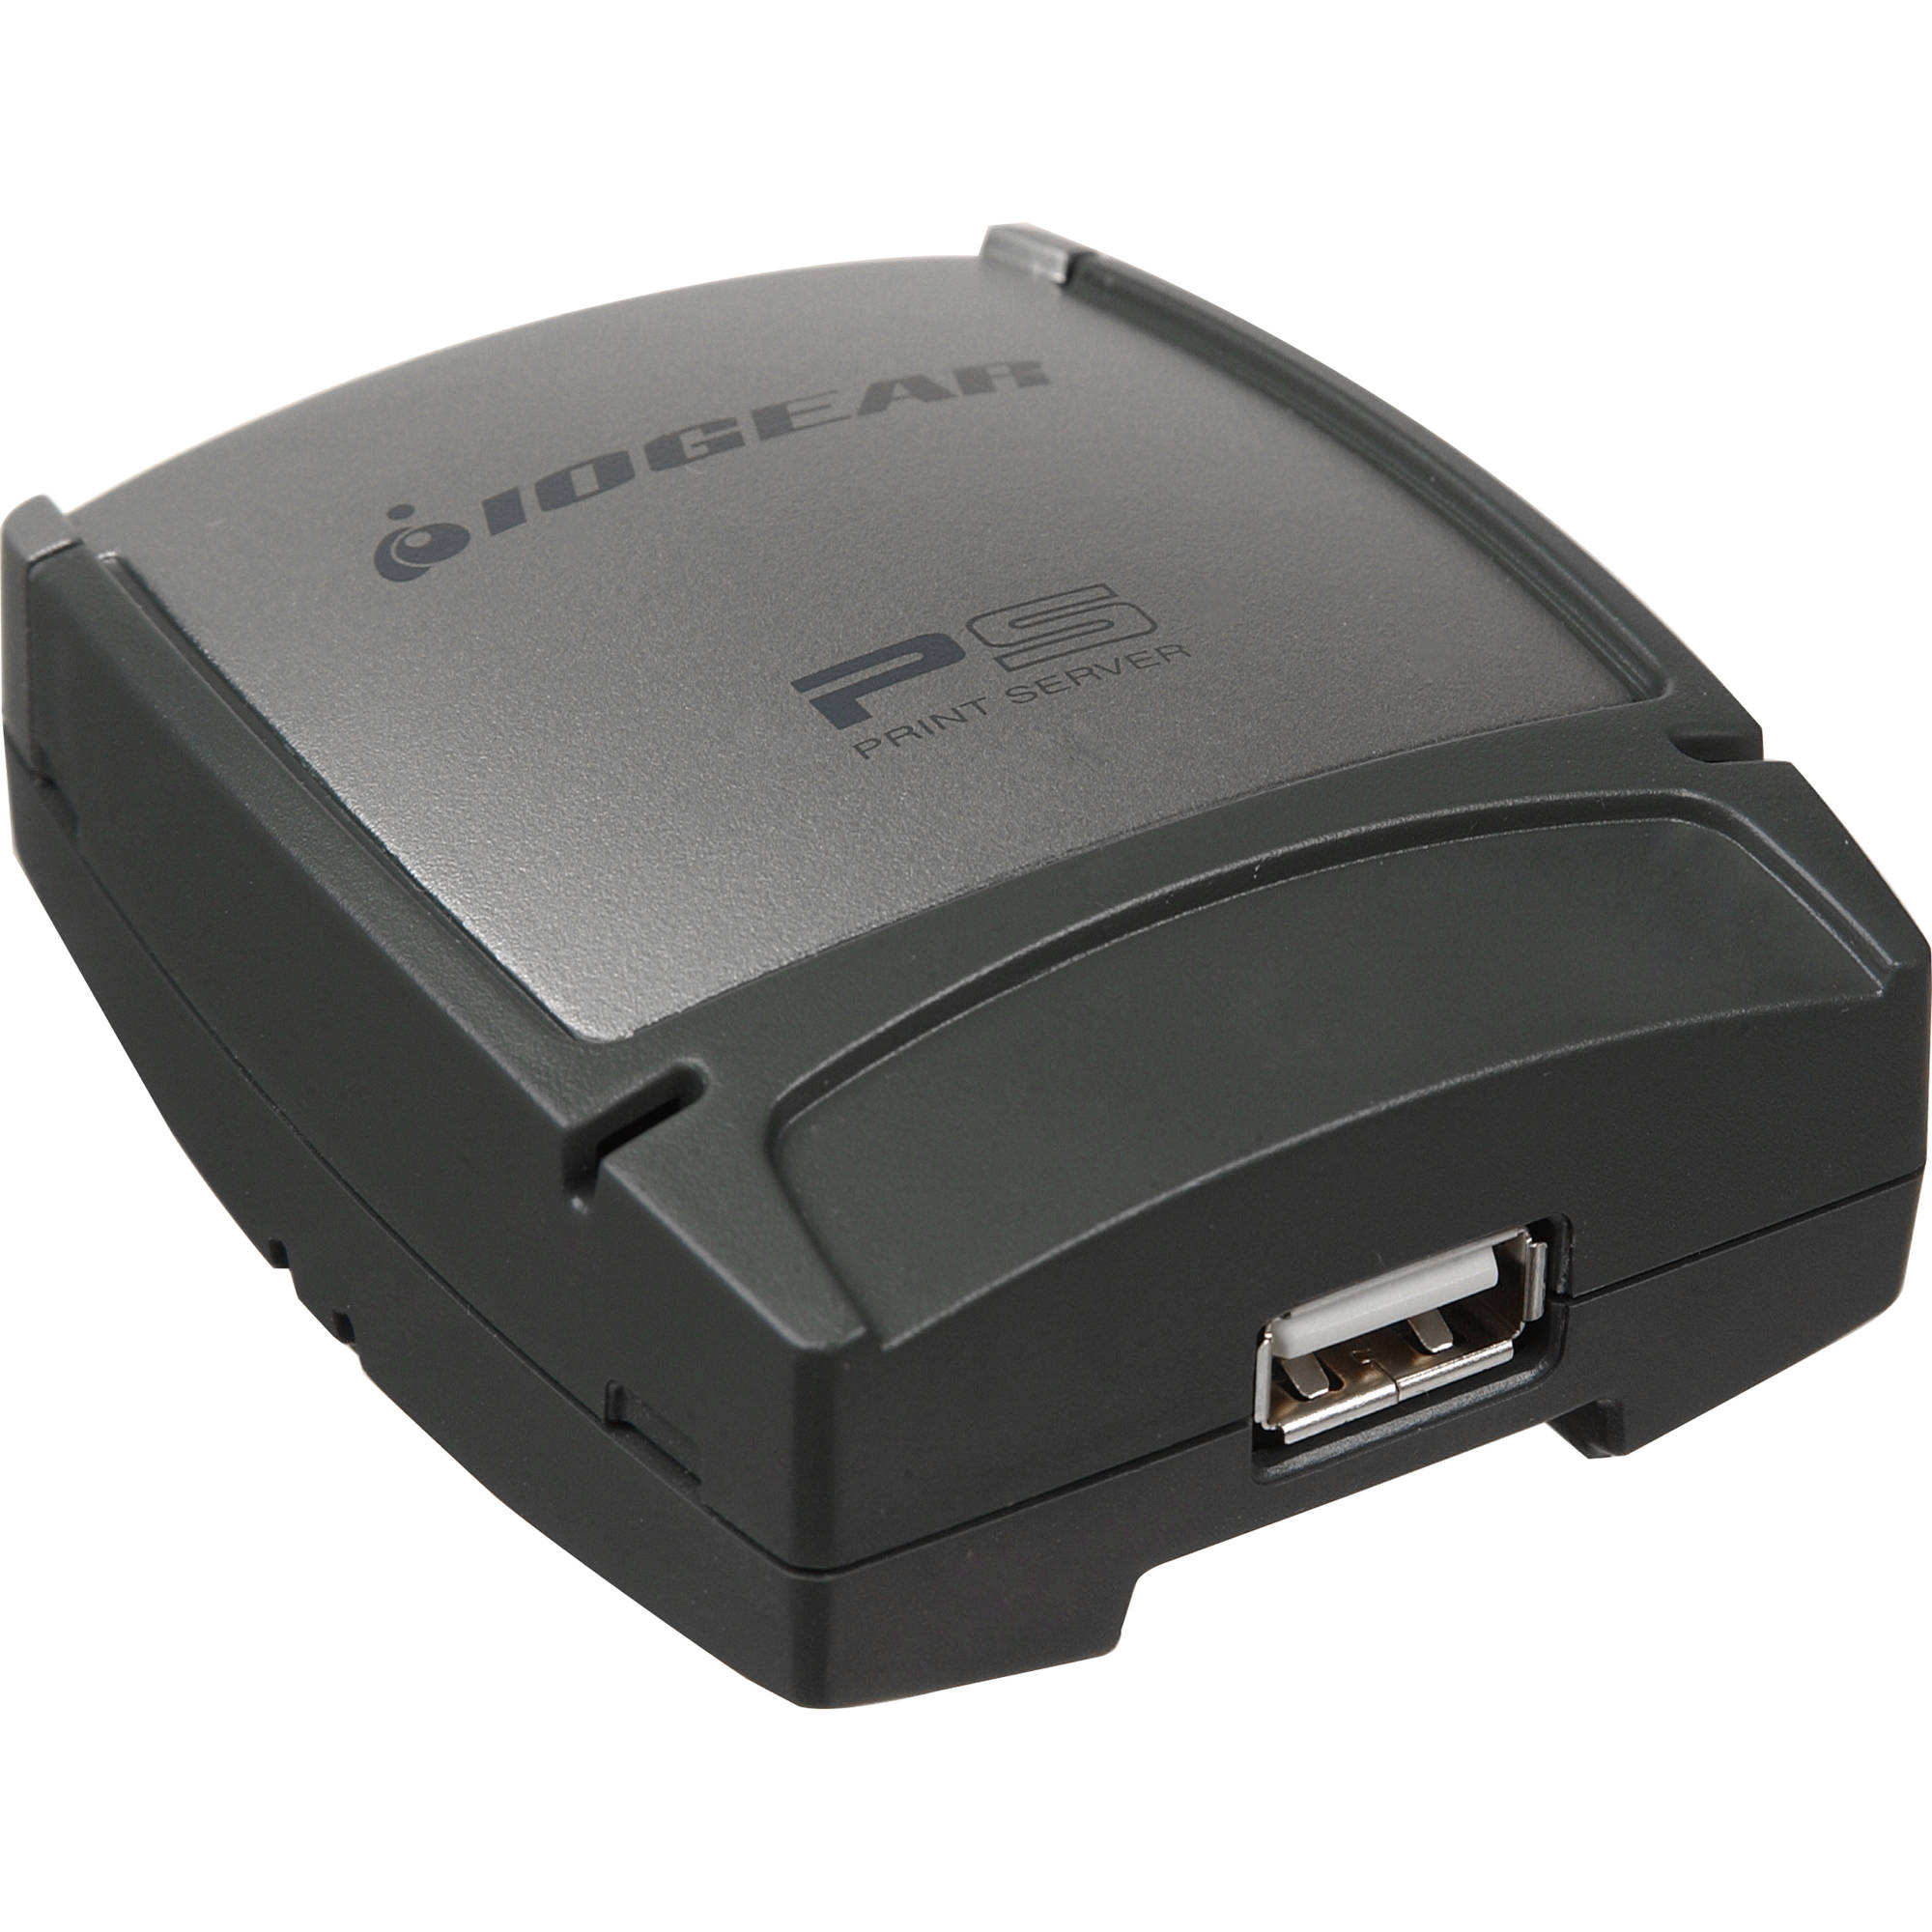 Принтсервер для принтера с USB. Принт сервер USB. Принт сервер для USB принтера. USB принтер to Wi-Fi.